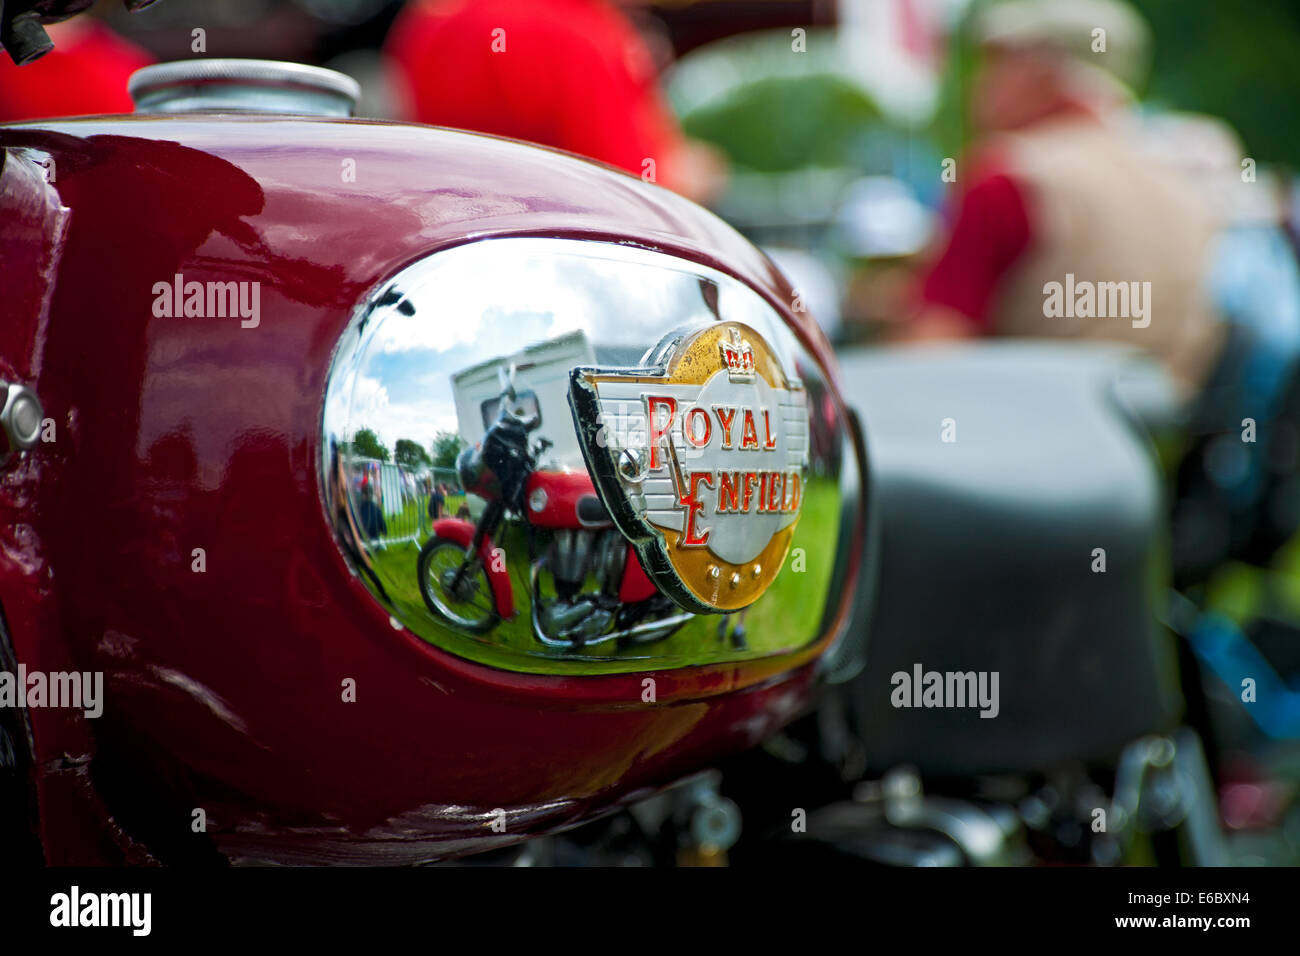 Close up of Emblem on a Royal Enfield motorbike motorcycle petrol tank England UK United Kingdom GB Great Britain Stock Photo